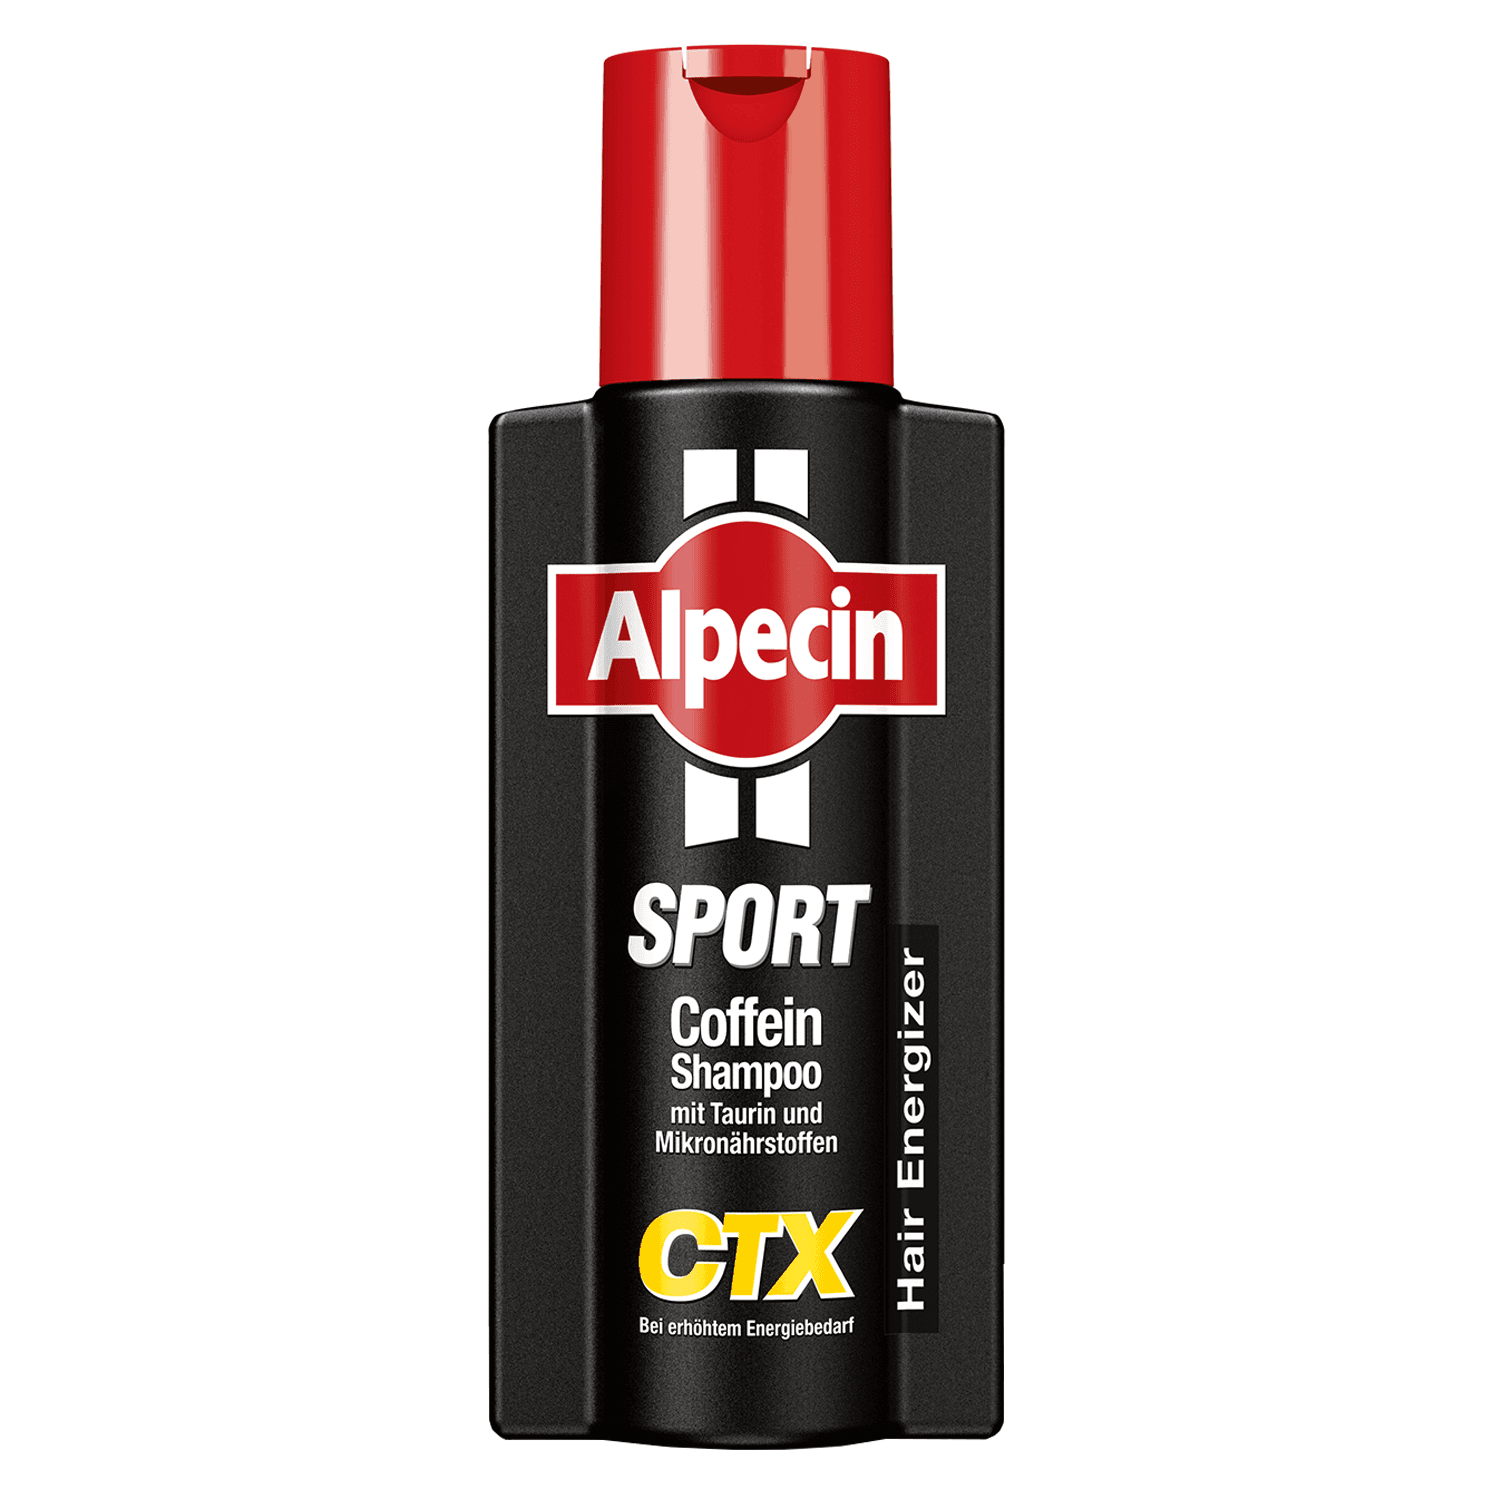 Alpecin - Sport Coffein-Shampoo CTX